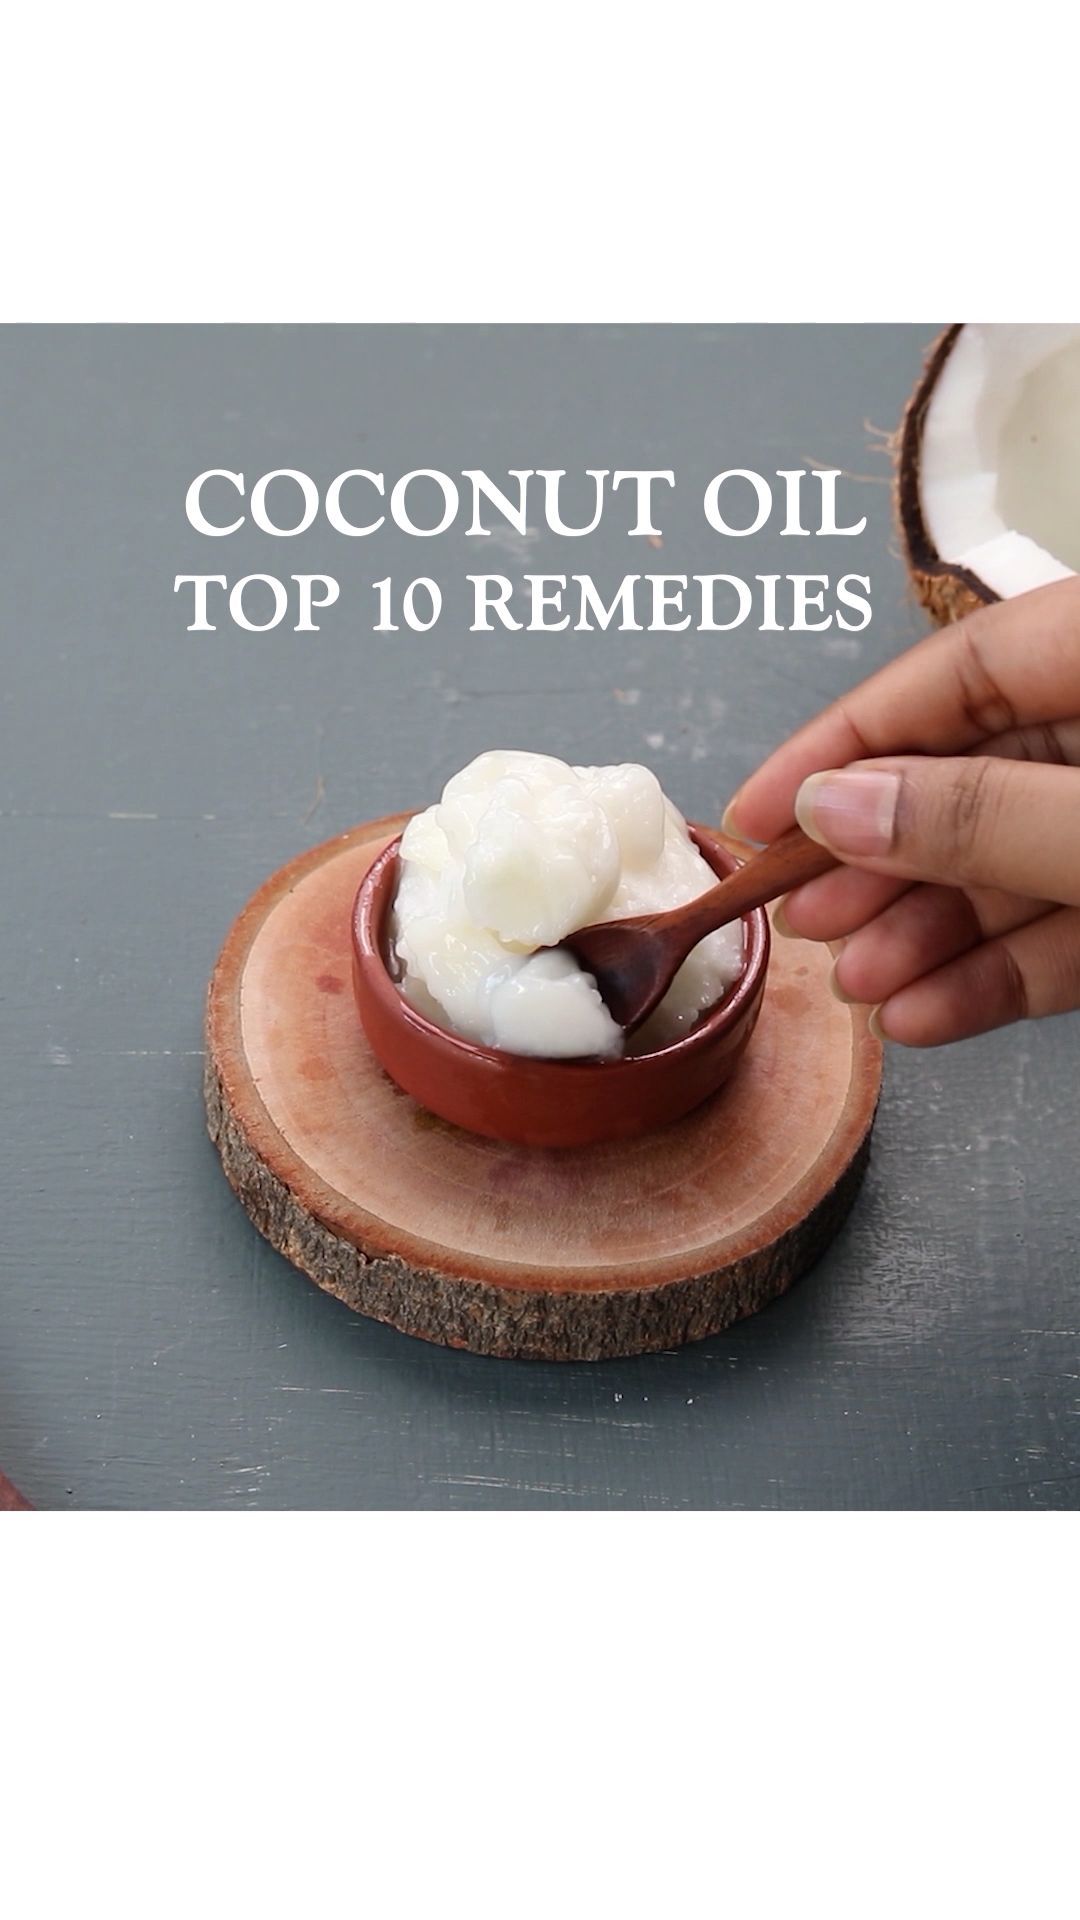 Top 10 coconut oil remedies - Top 10 coconut oil remedies -   25 natural beauty Videos ideas